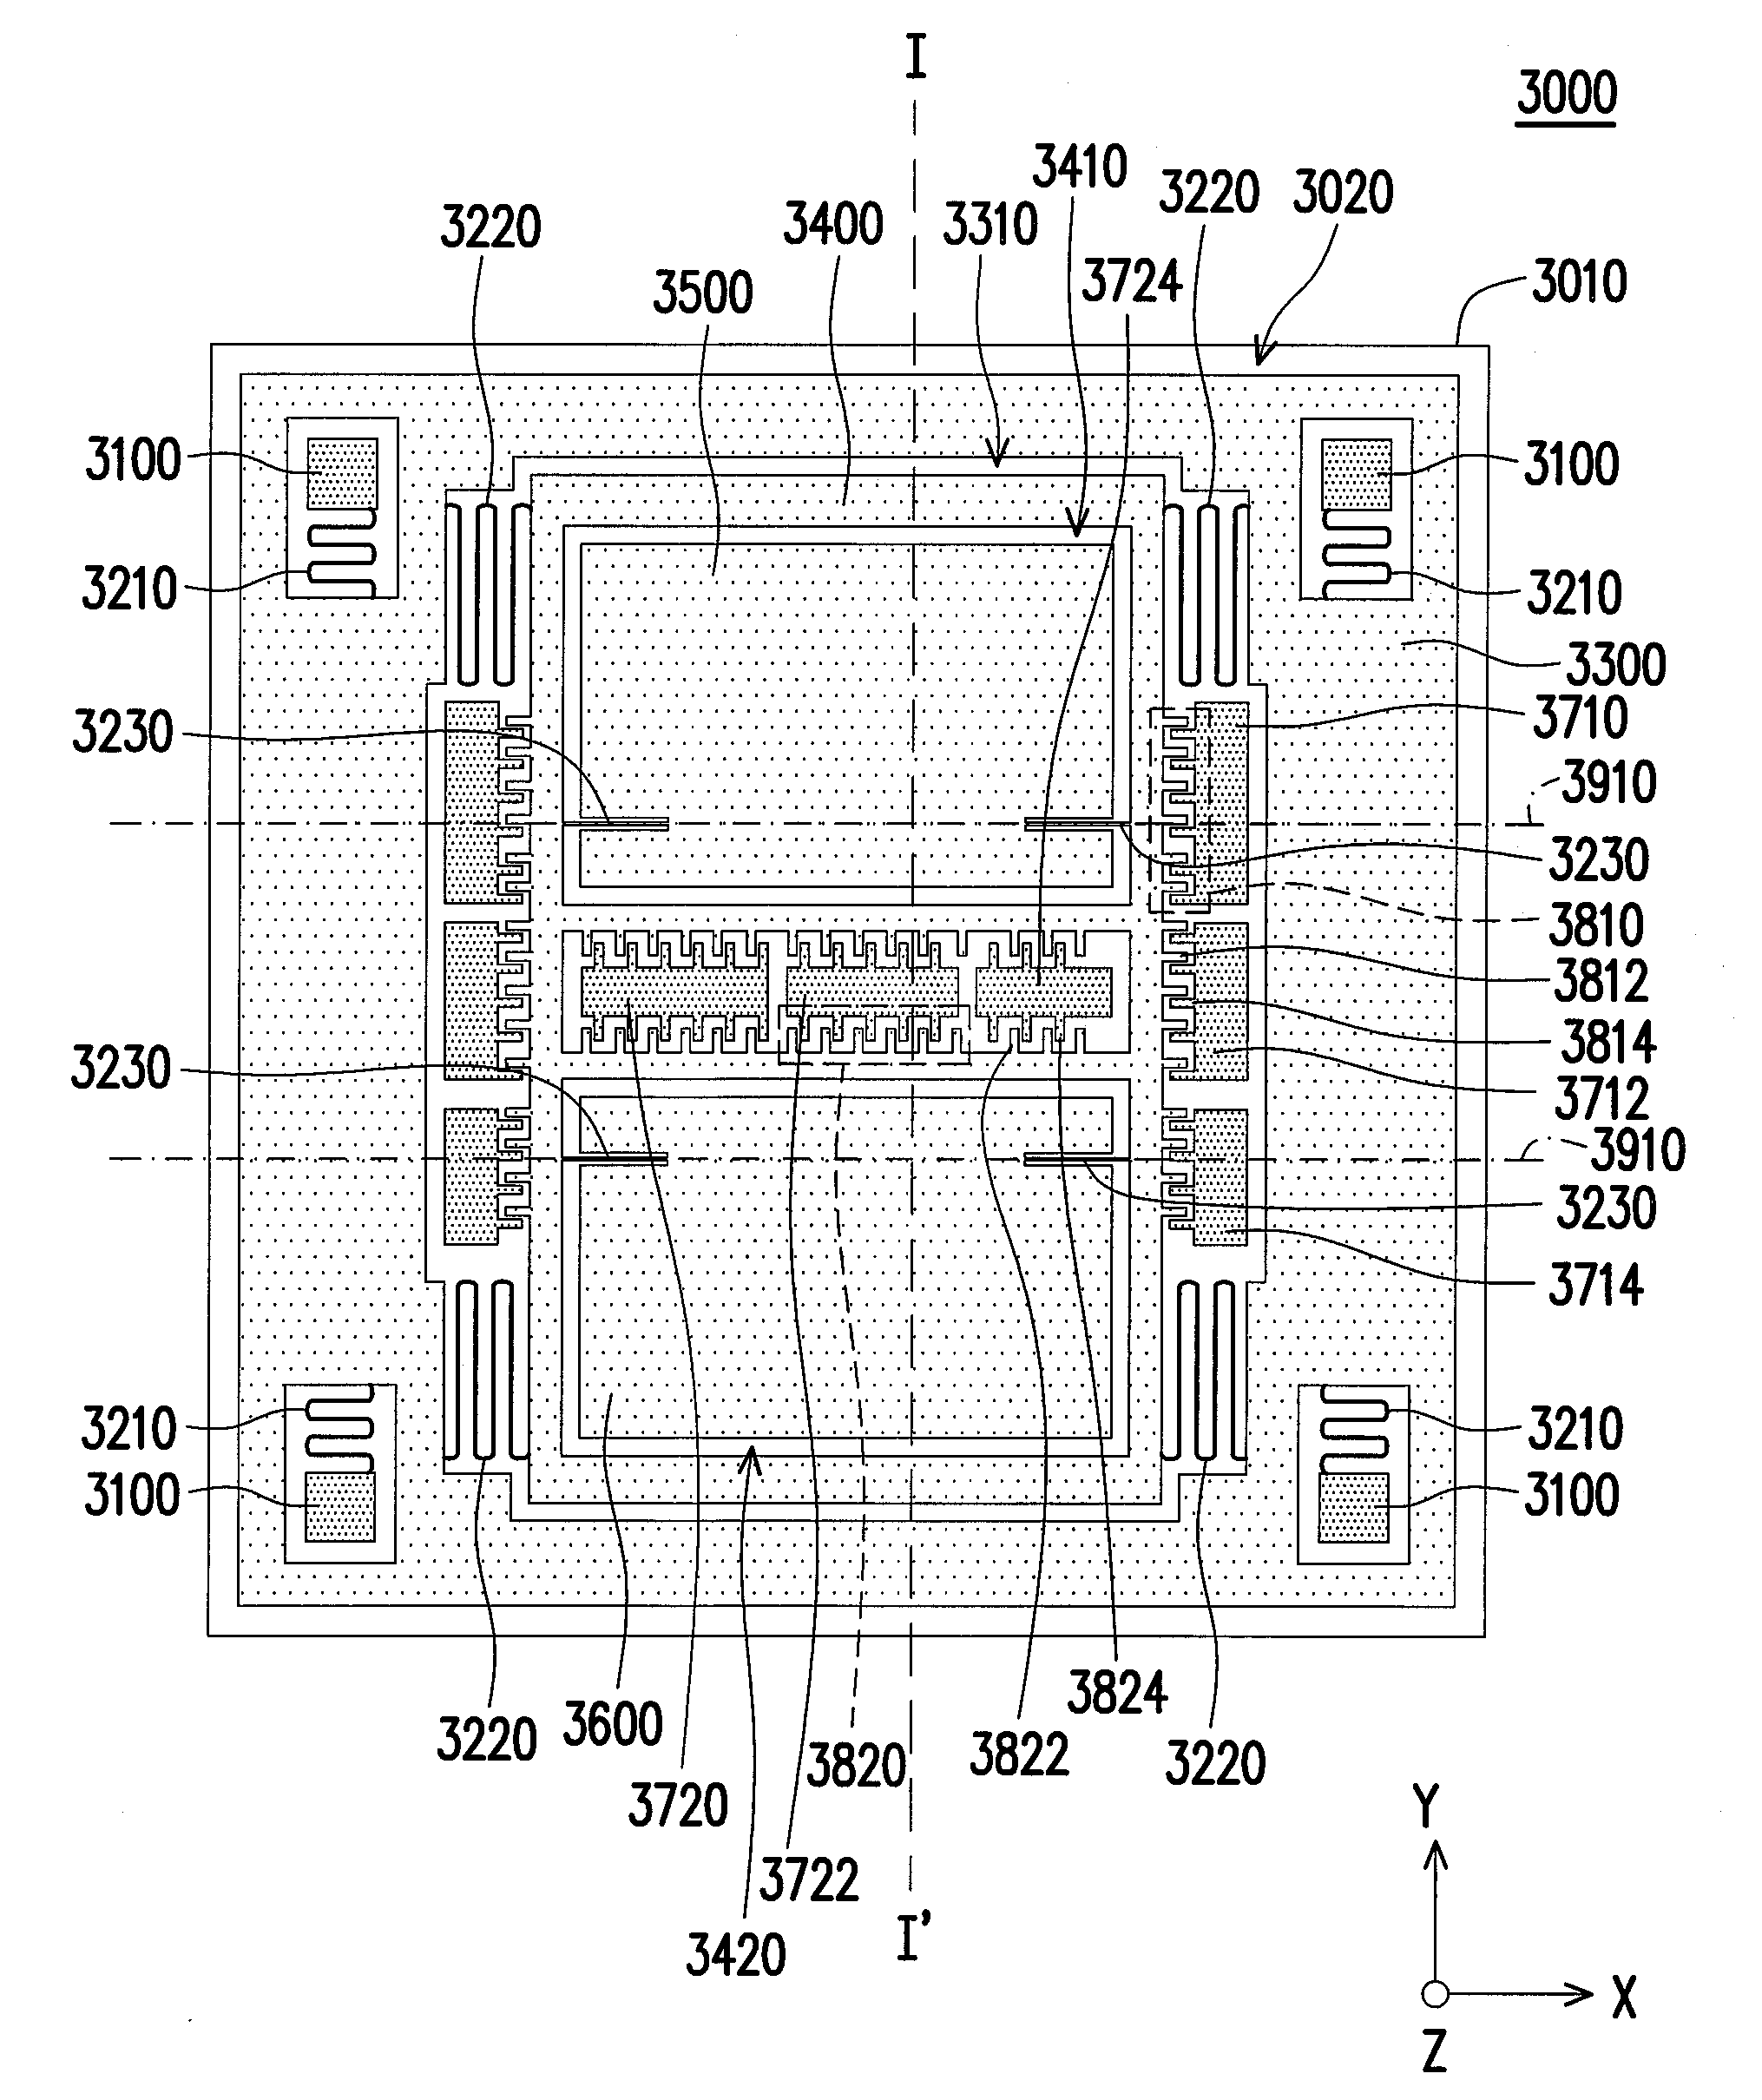 Multi-axis capacitive accelerometer